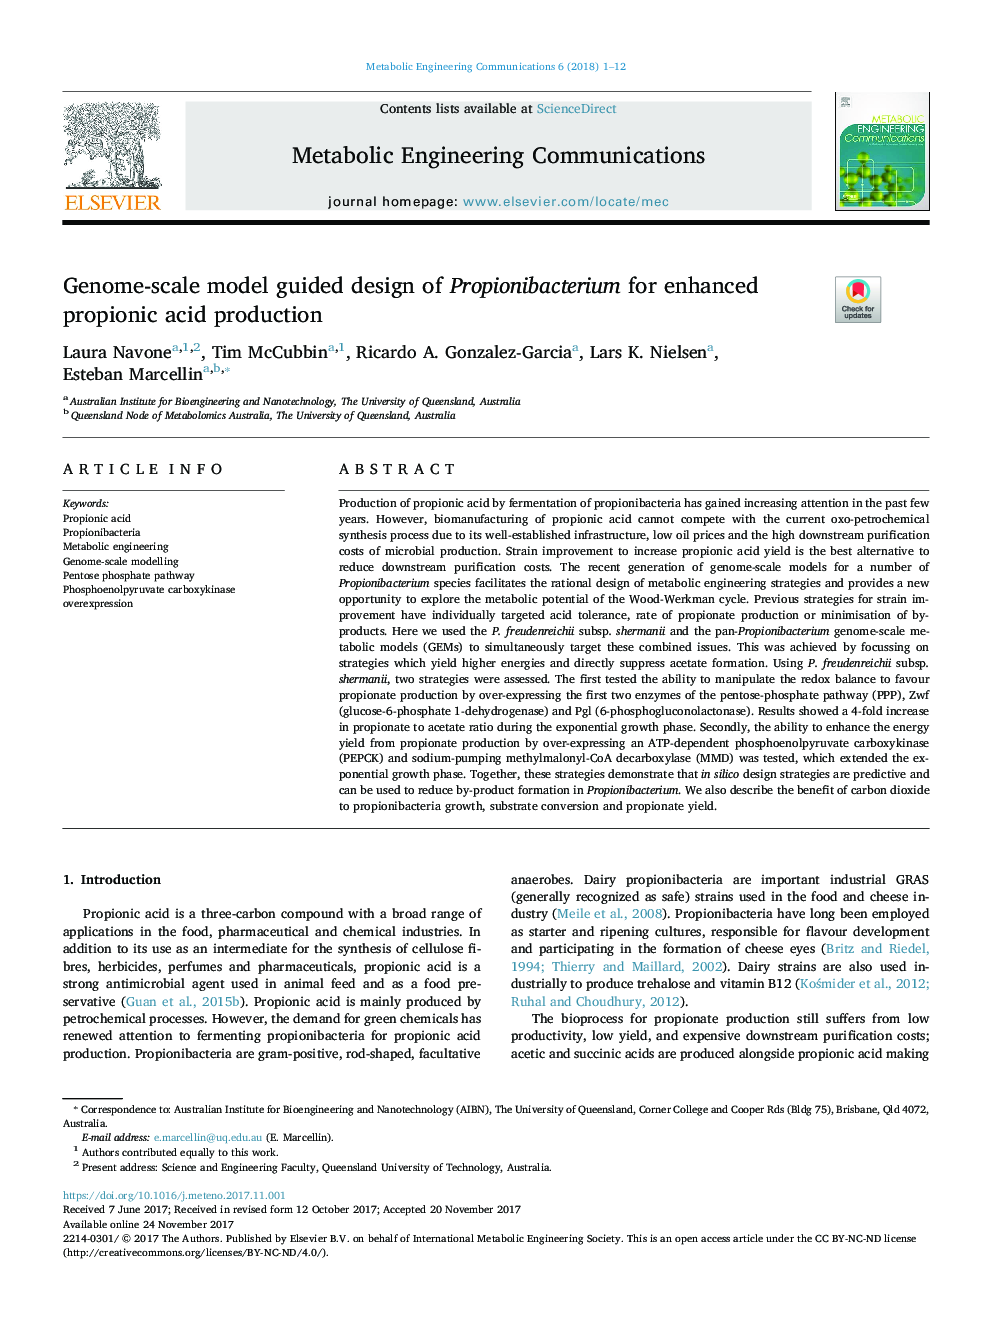 Genome-scale model guided design of Propionibacterium for enhanced propionic acid production